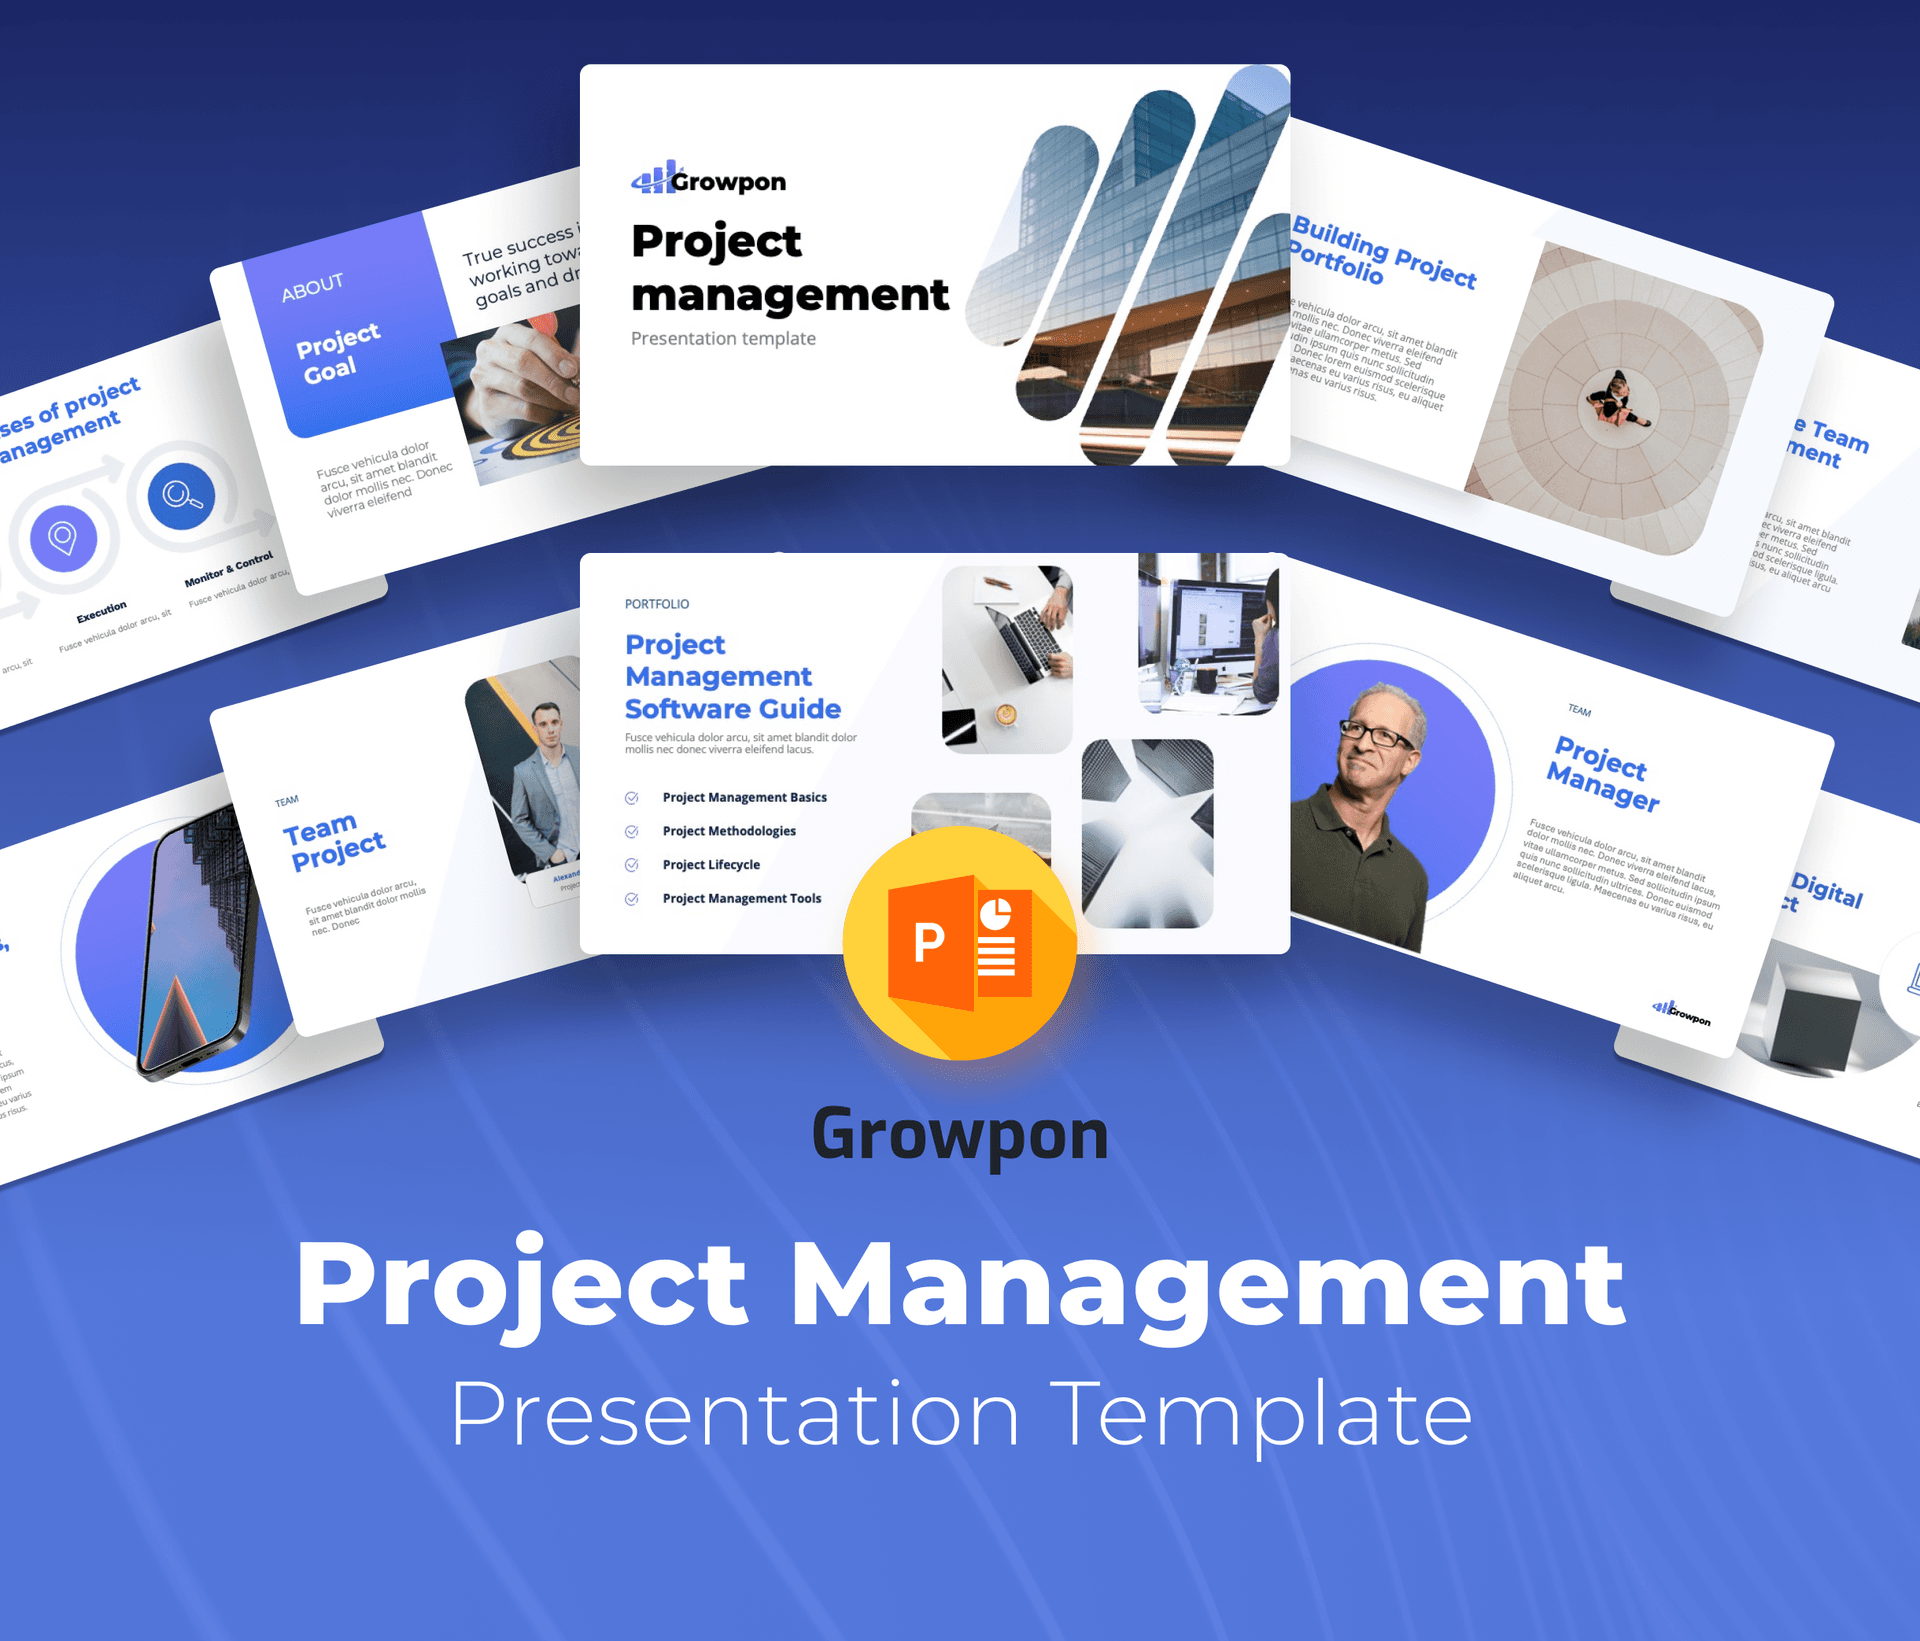 Growpon -Project management Presentation Template